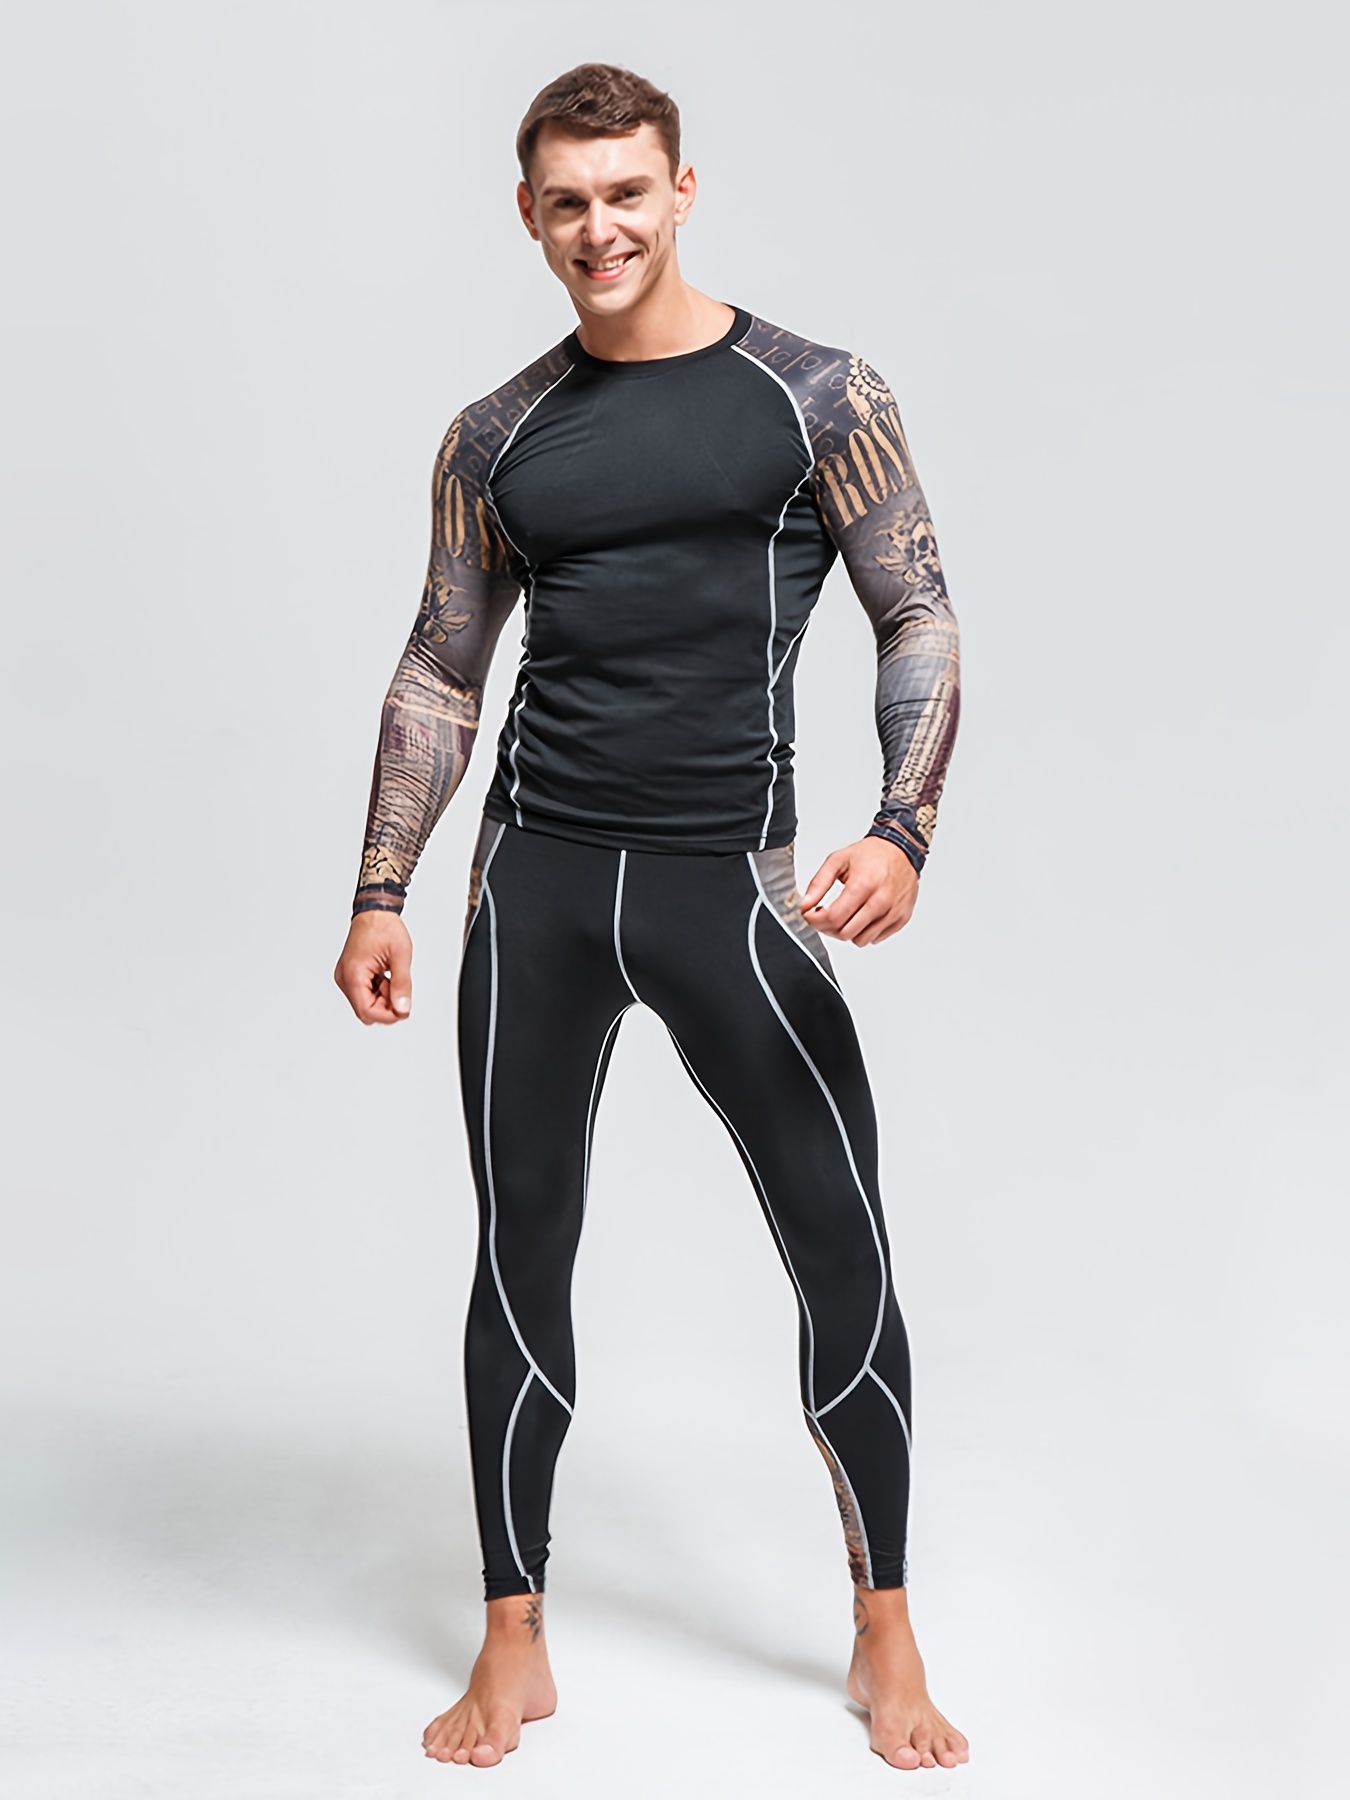 1Bests Men's Sports Running Set Compression Shirt + Pants Skin